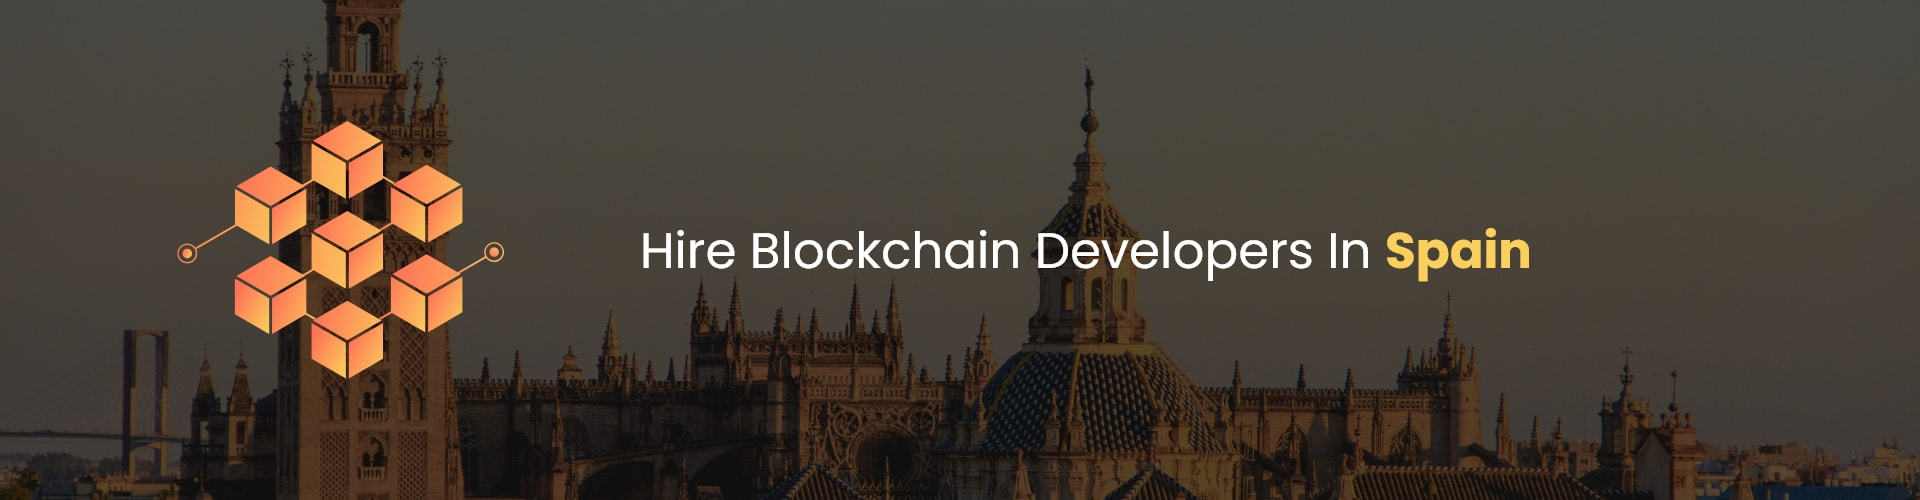 hire blockchain developers in spain